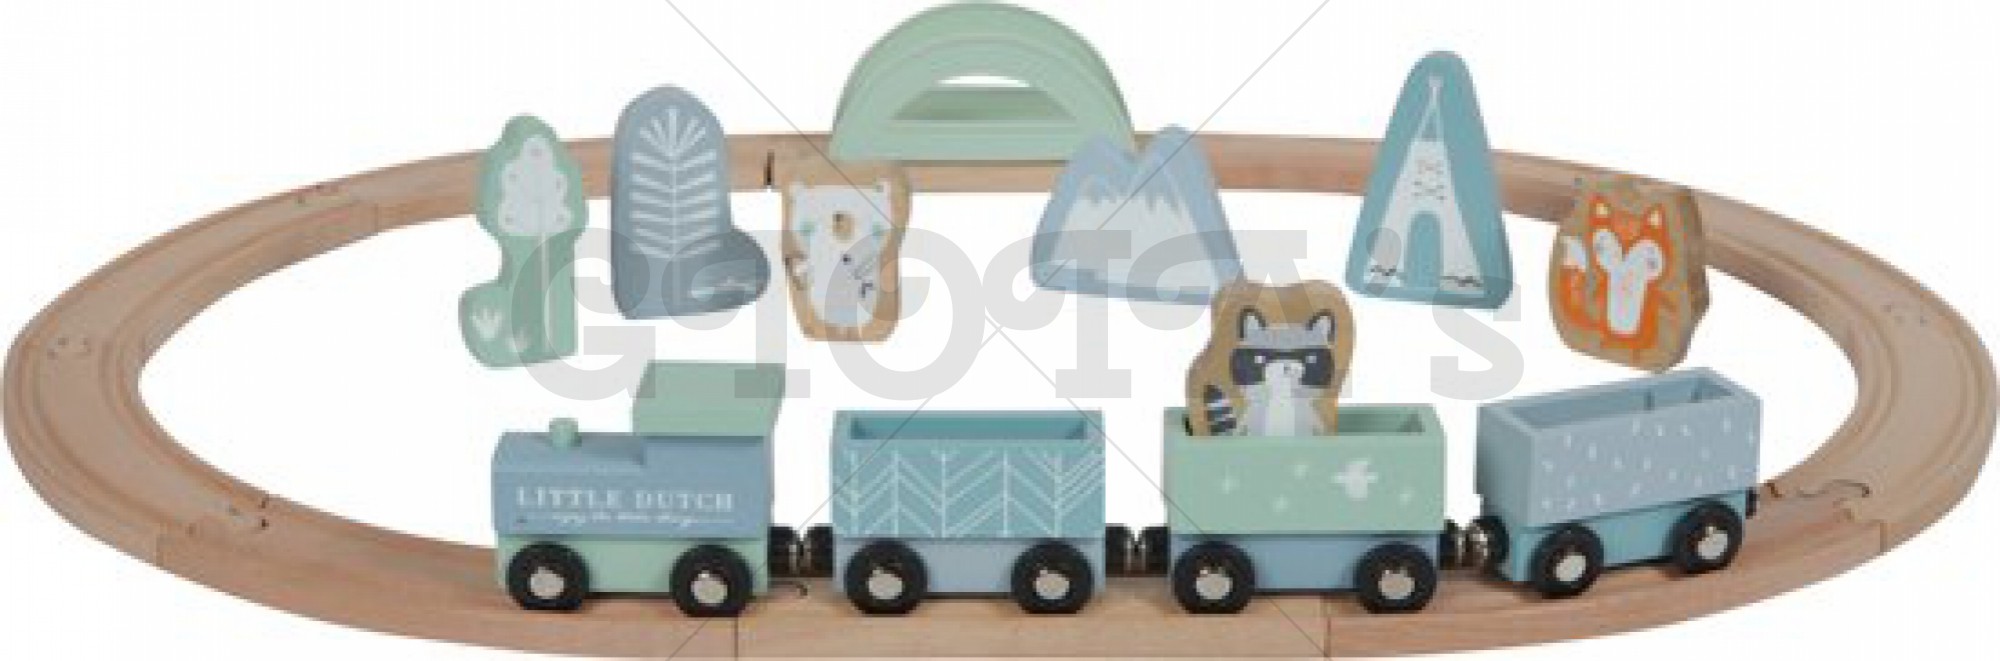 Little Dutch - houten trein met wagonnetjes Blue - GIOIA's cadeau feestartikelen